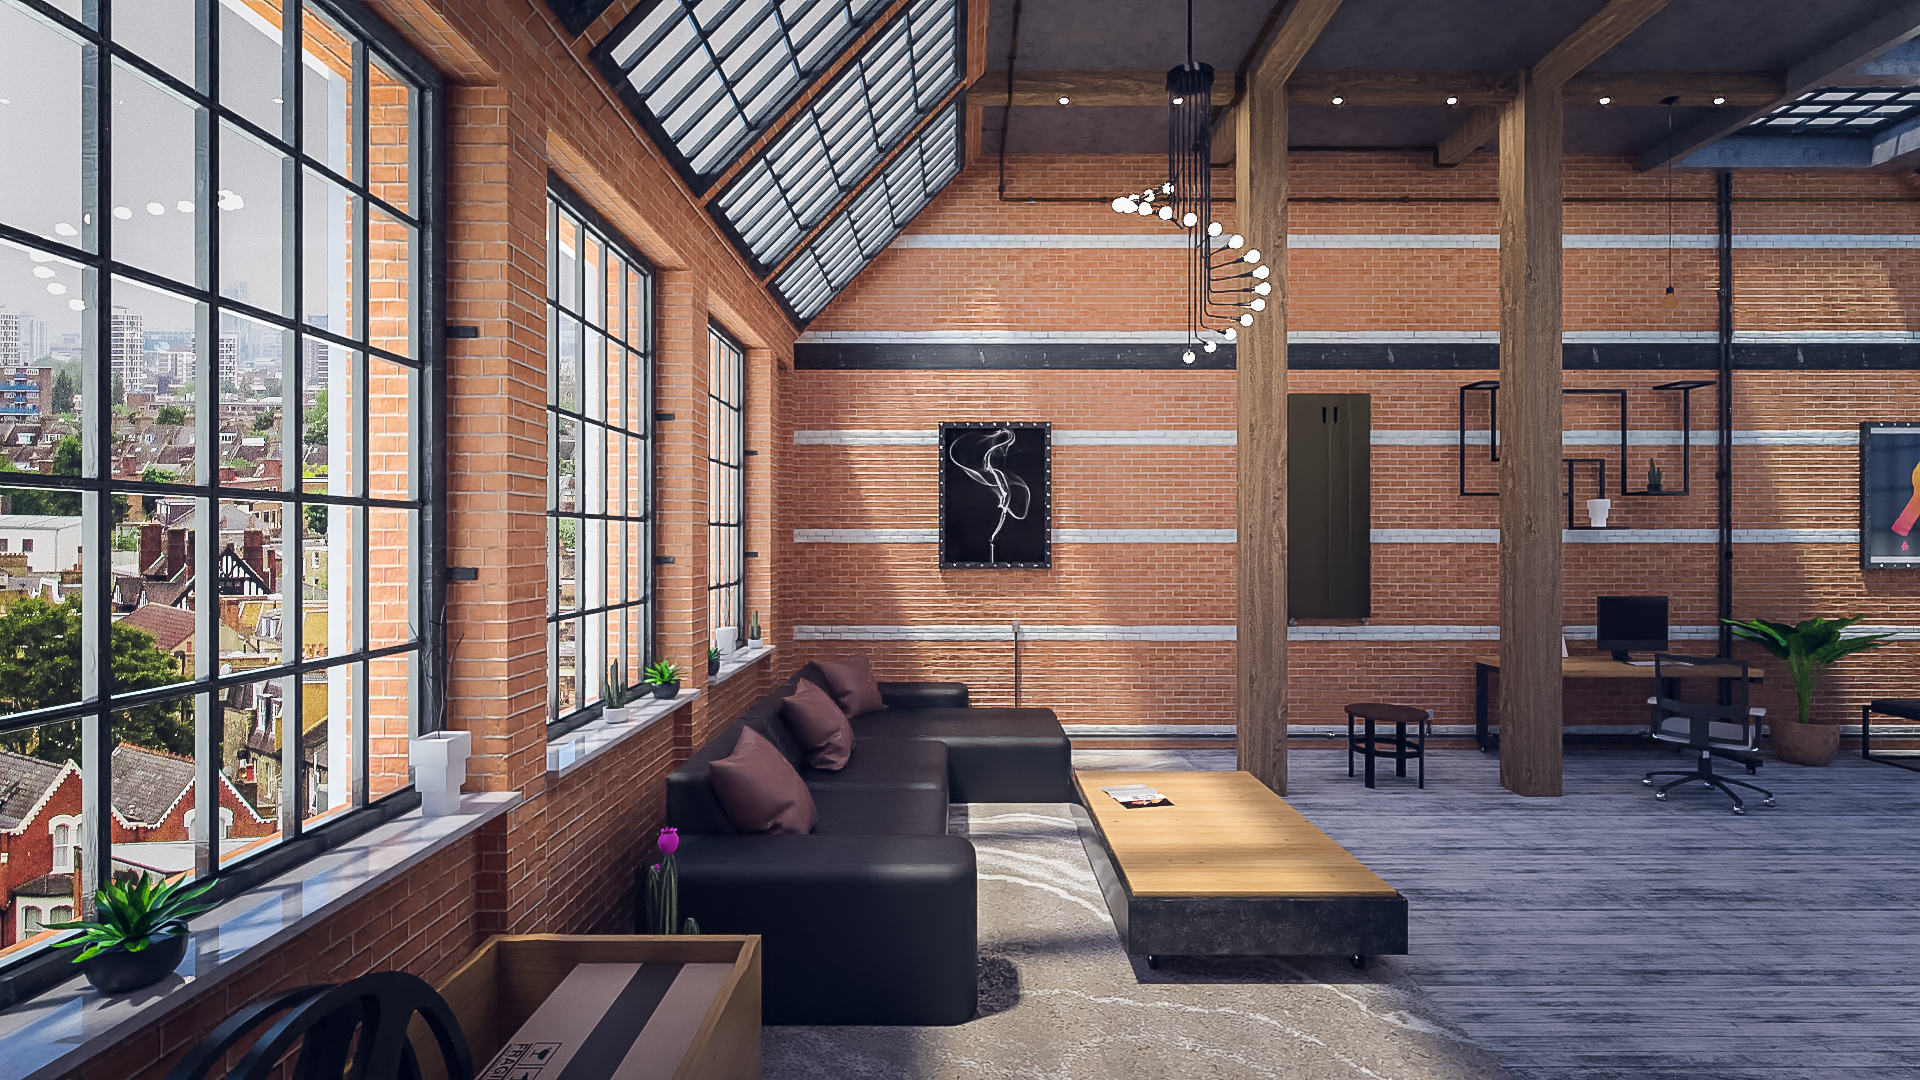 TS Streamlined Living Room by: Tesla3dCorp, 3D Models by Daz 3D